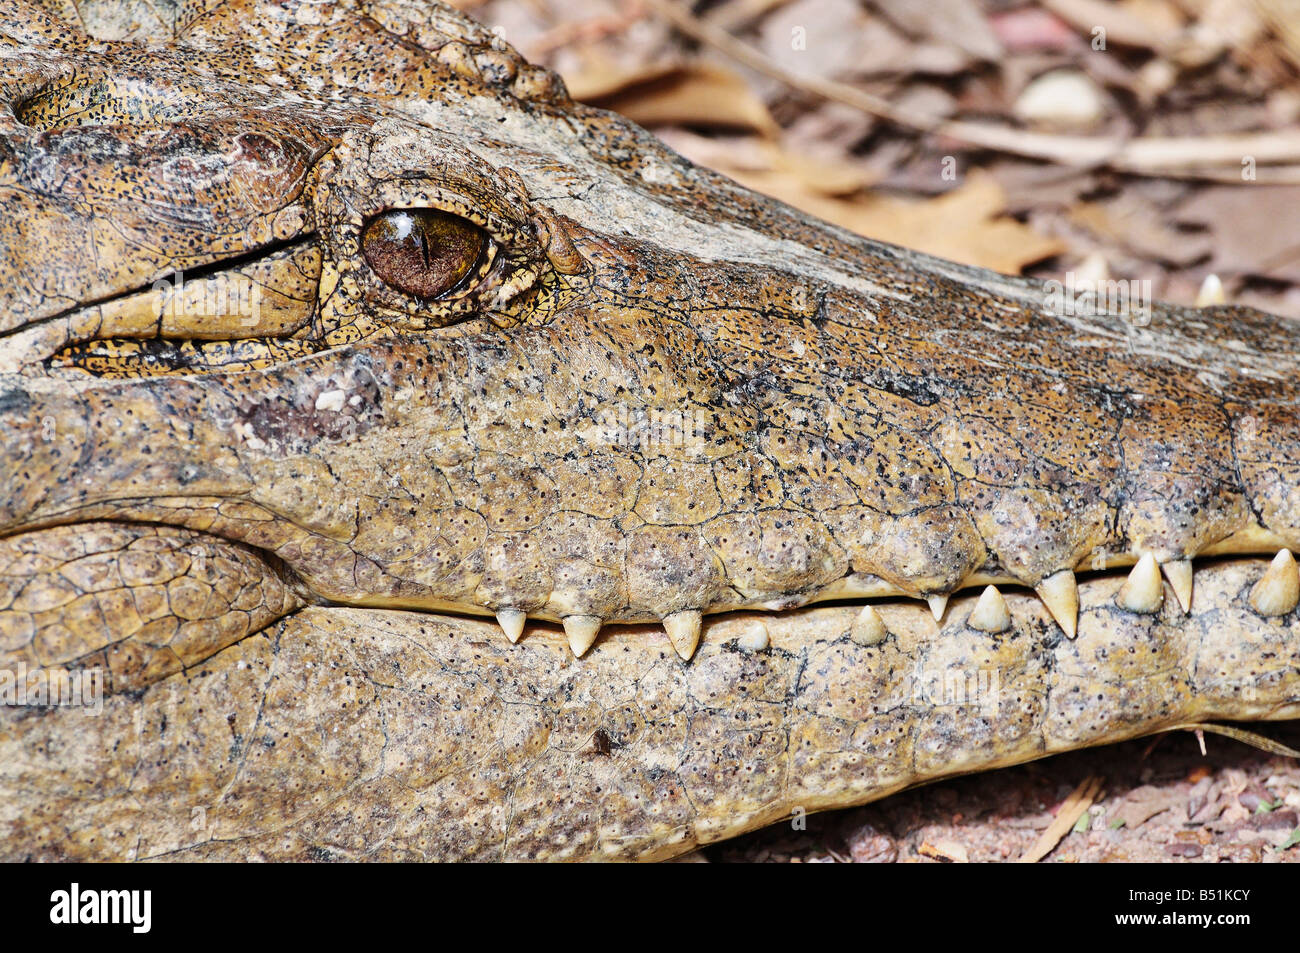 Close-Up of Freshwater Crocodile, Northern Territory, Australia Stock Photo